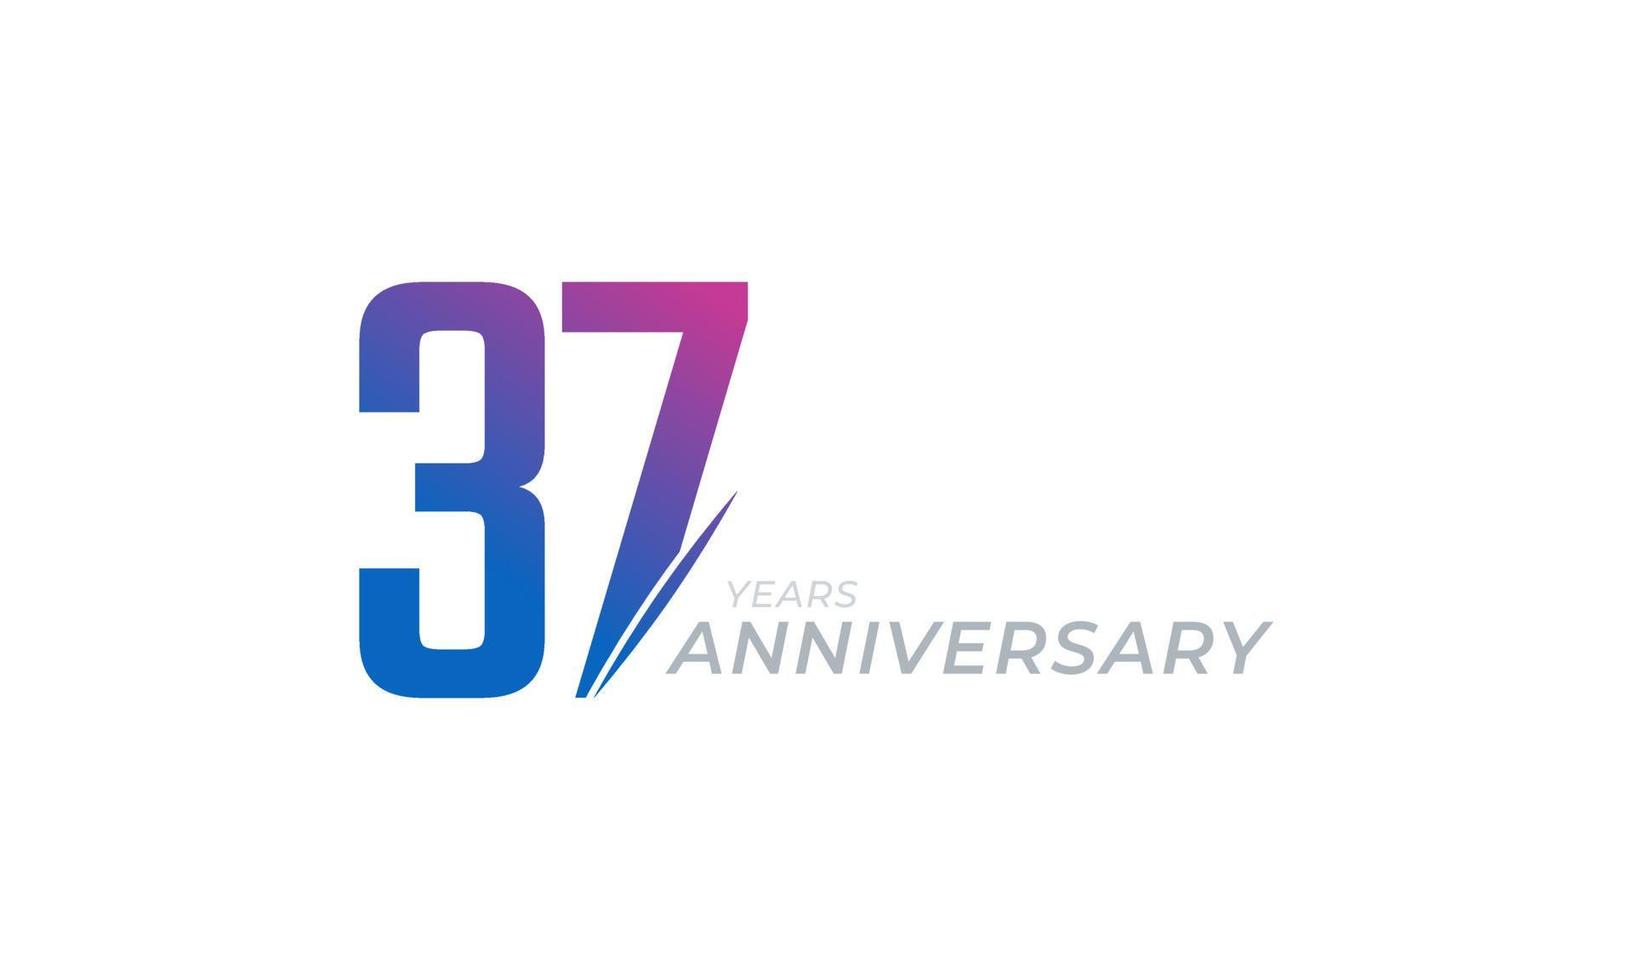 37 Year Anniversary Celebration Vector. Happy Anniversary Greeting Celebrates Template Design Illustration vector